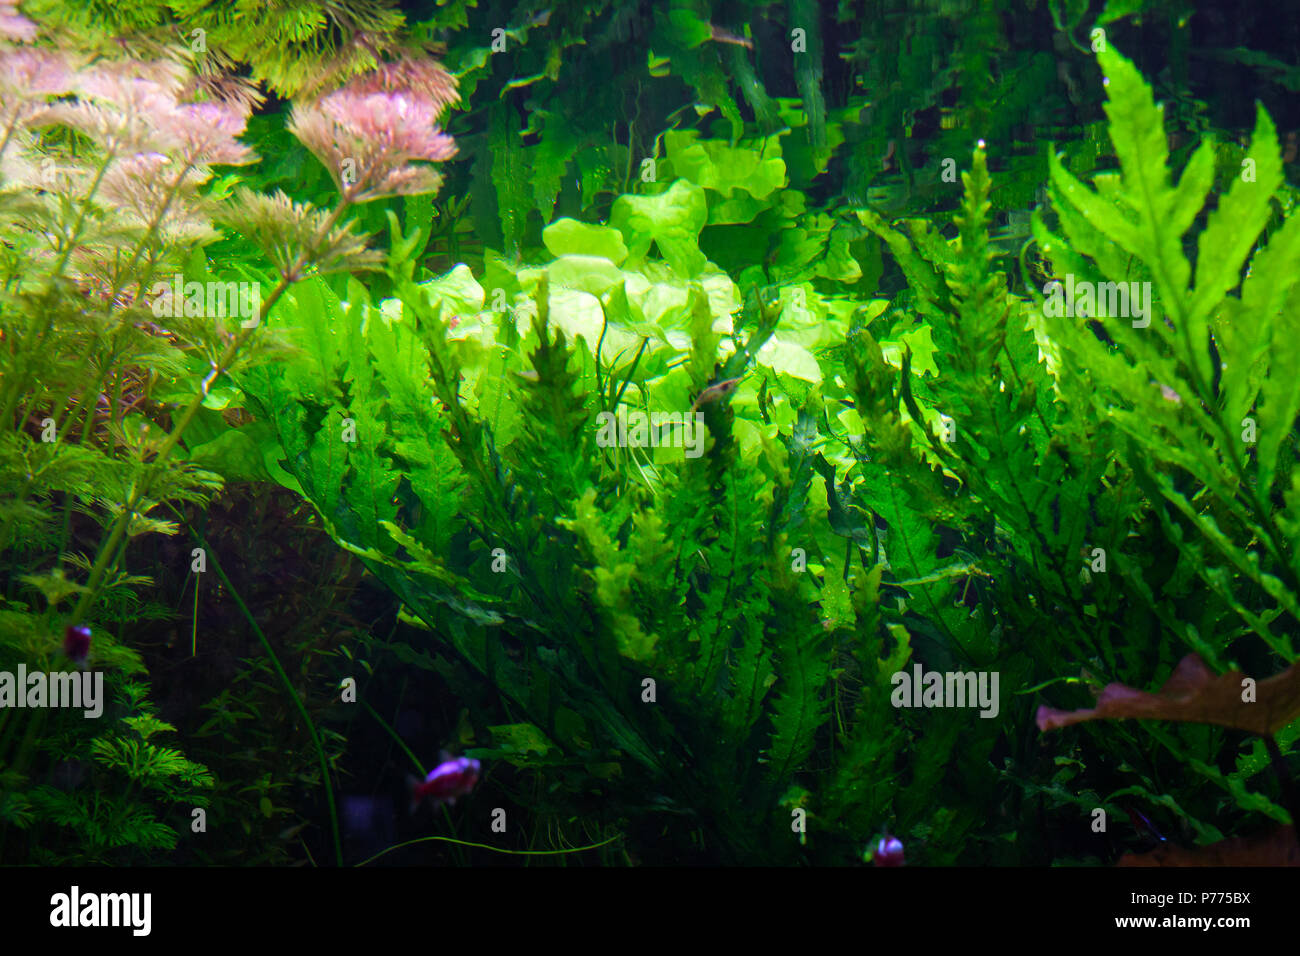 Many beautiful green algae under the water. Stock Photo